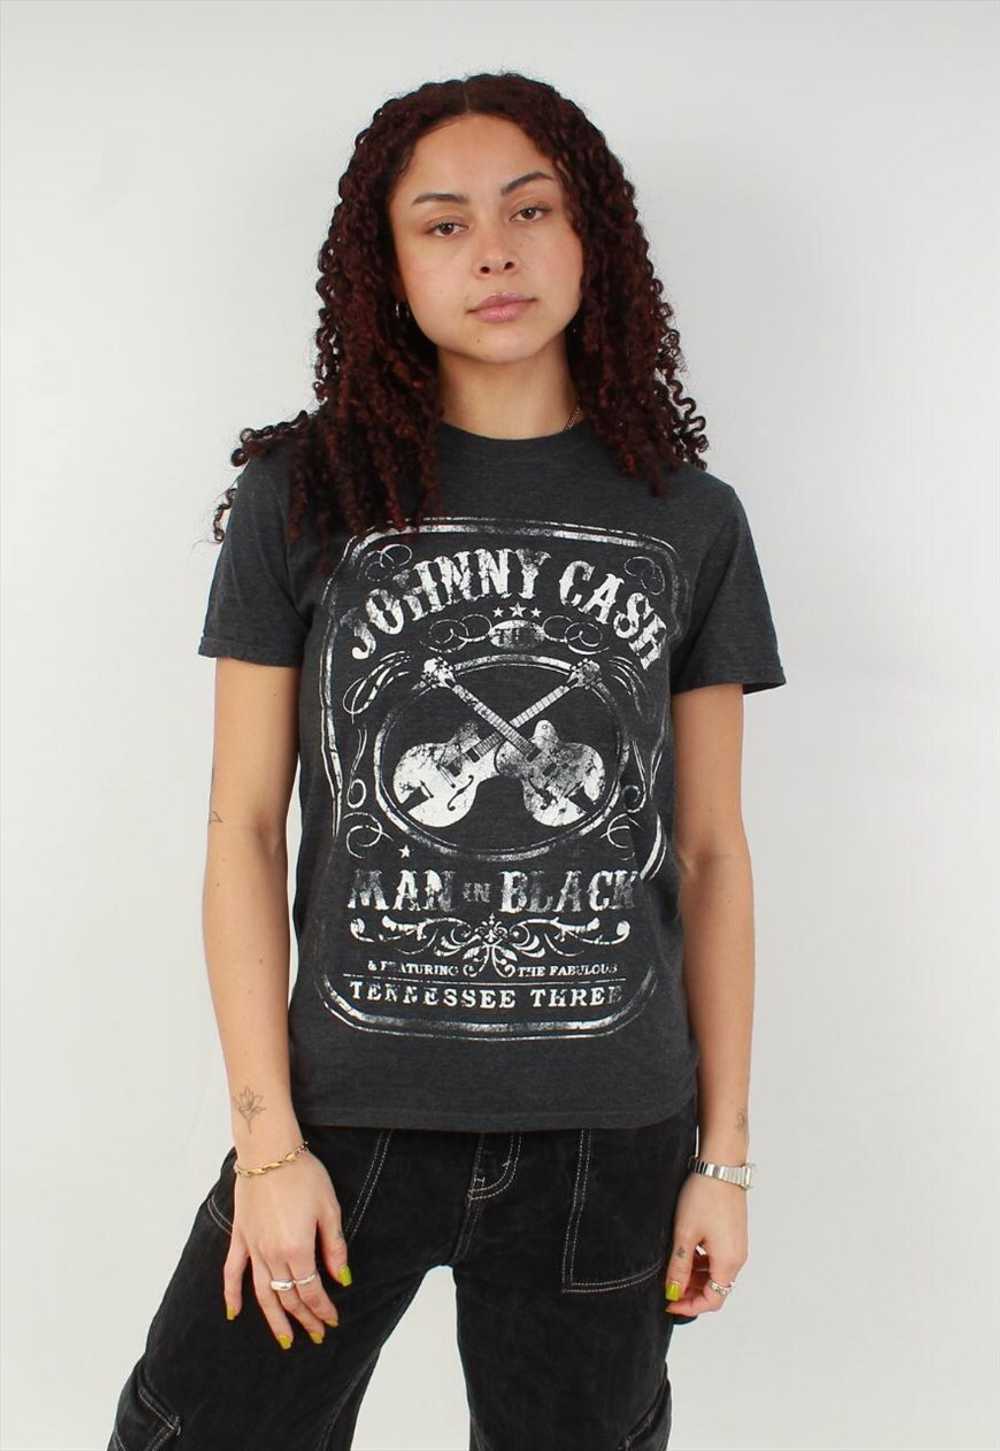 "Vintage johnny cash grey graphic t shirt - image 1